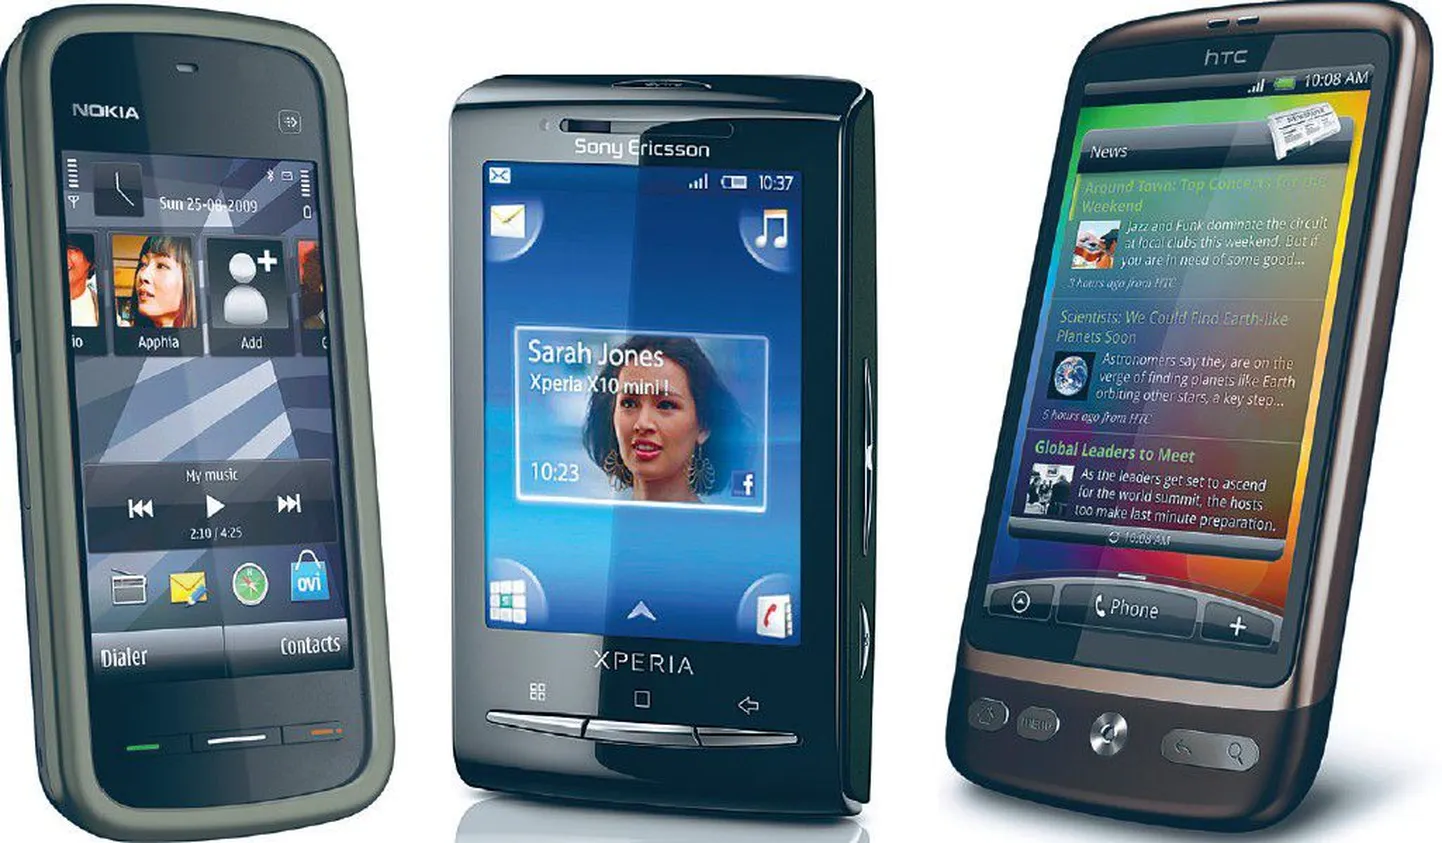 Nokia 5230, Sony Ericsson X10 Mini, HTC Desire.